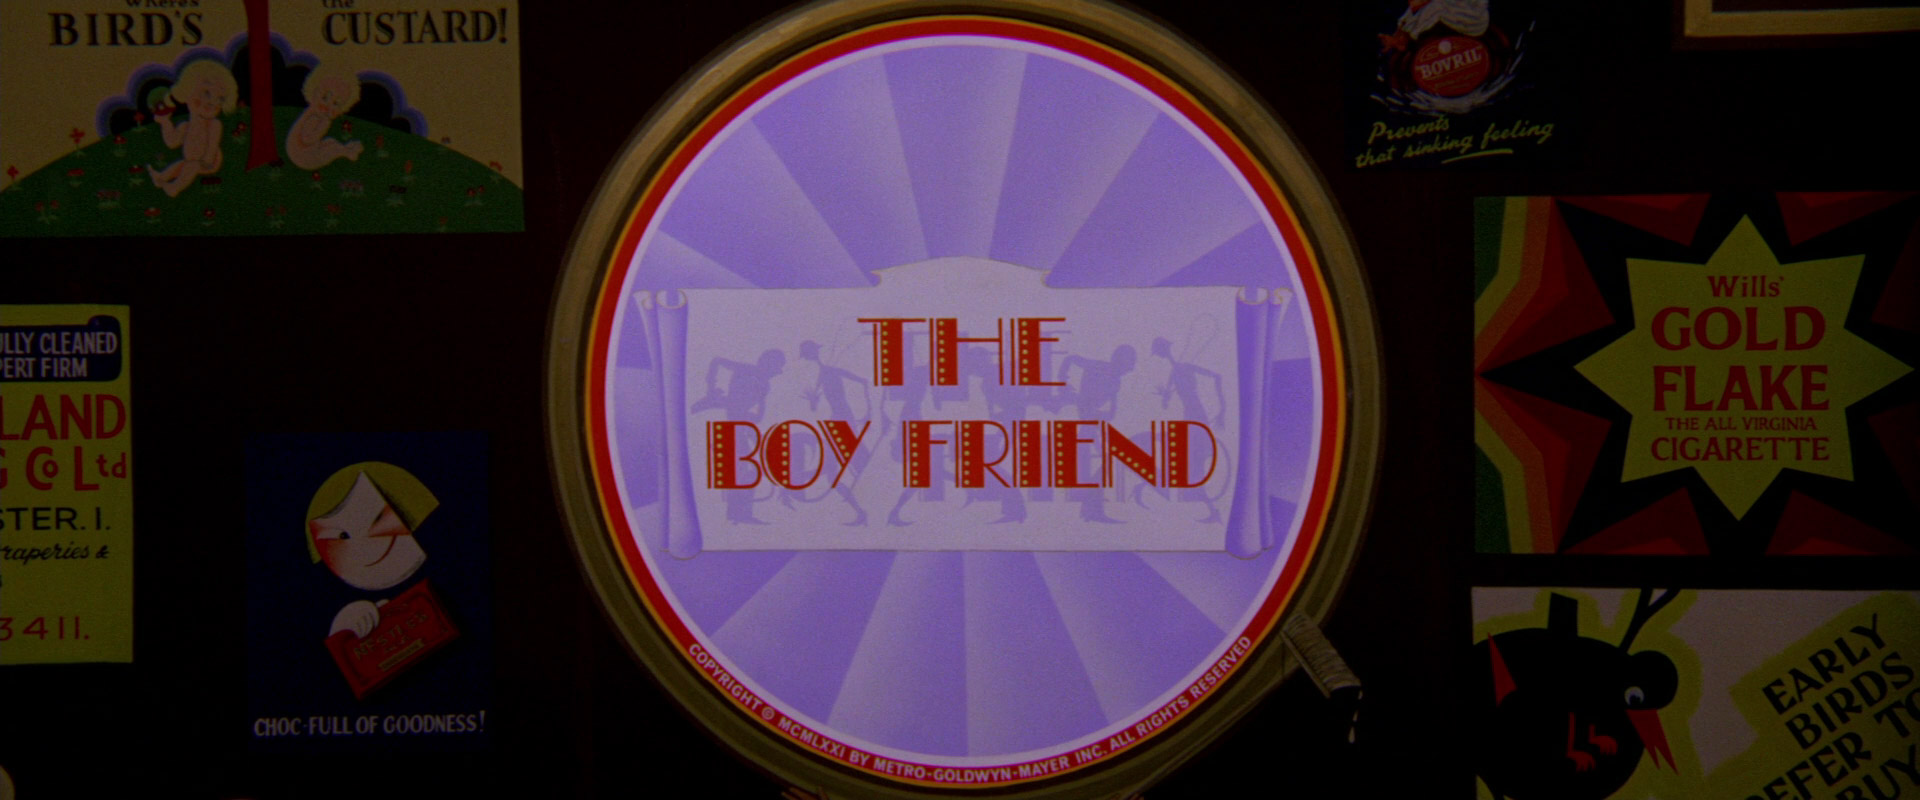 opening title in The Boy Friend